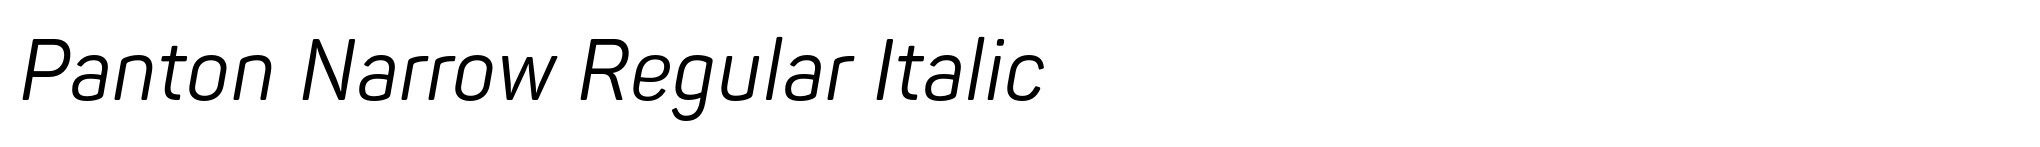 Panton Narrow Regular Italic image